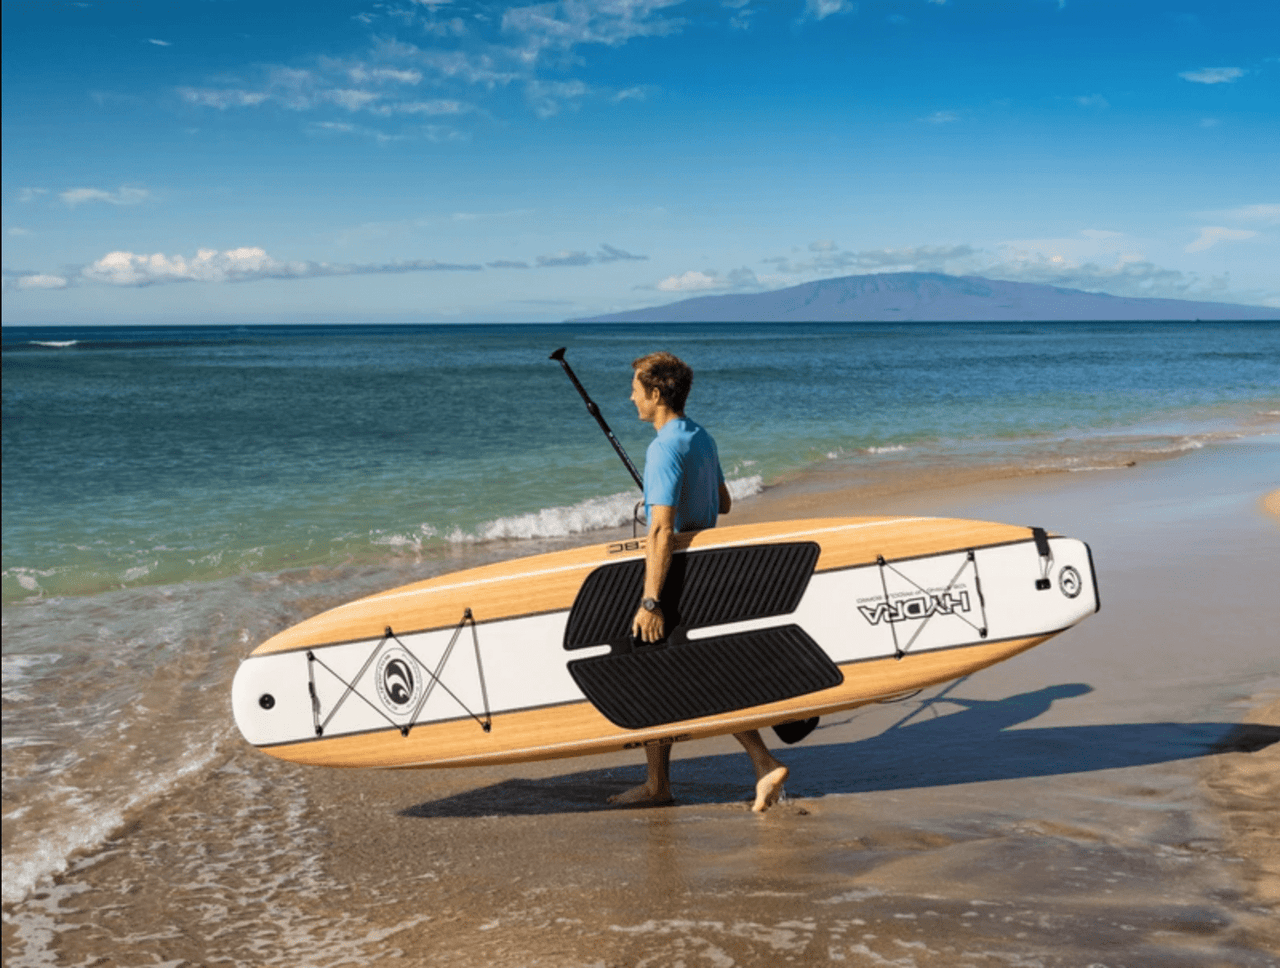 10'6" CBC Hydra Foam SUP Paddle Board - Good Wave